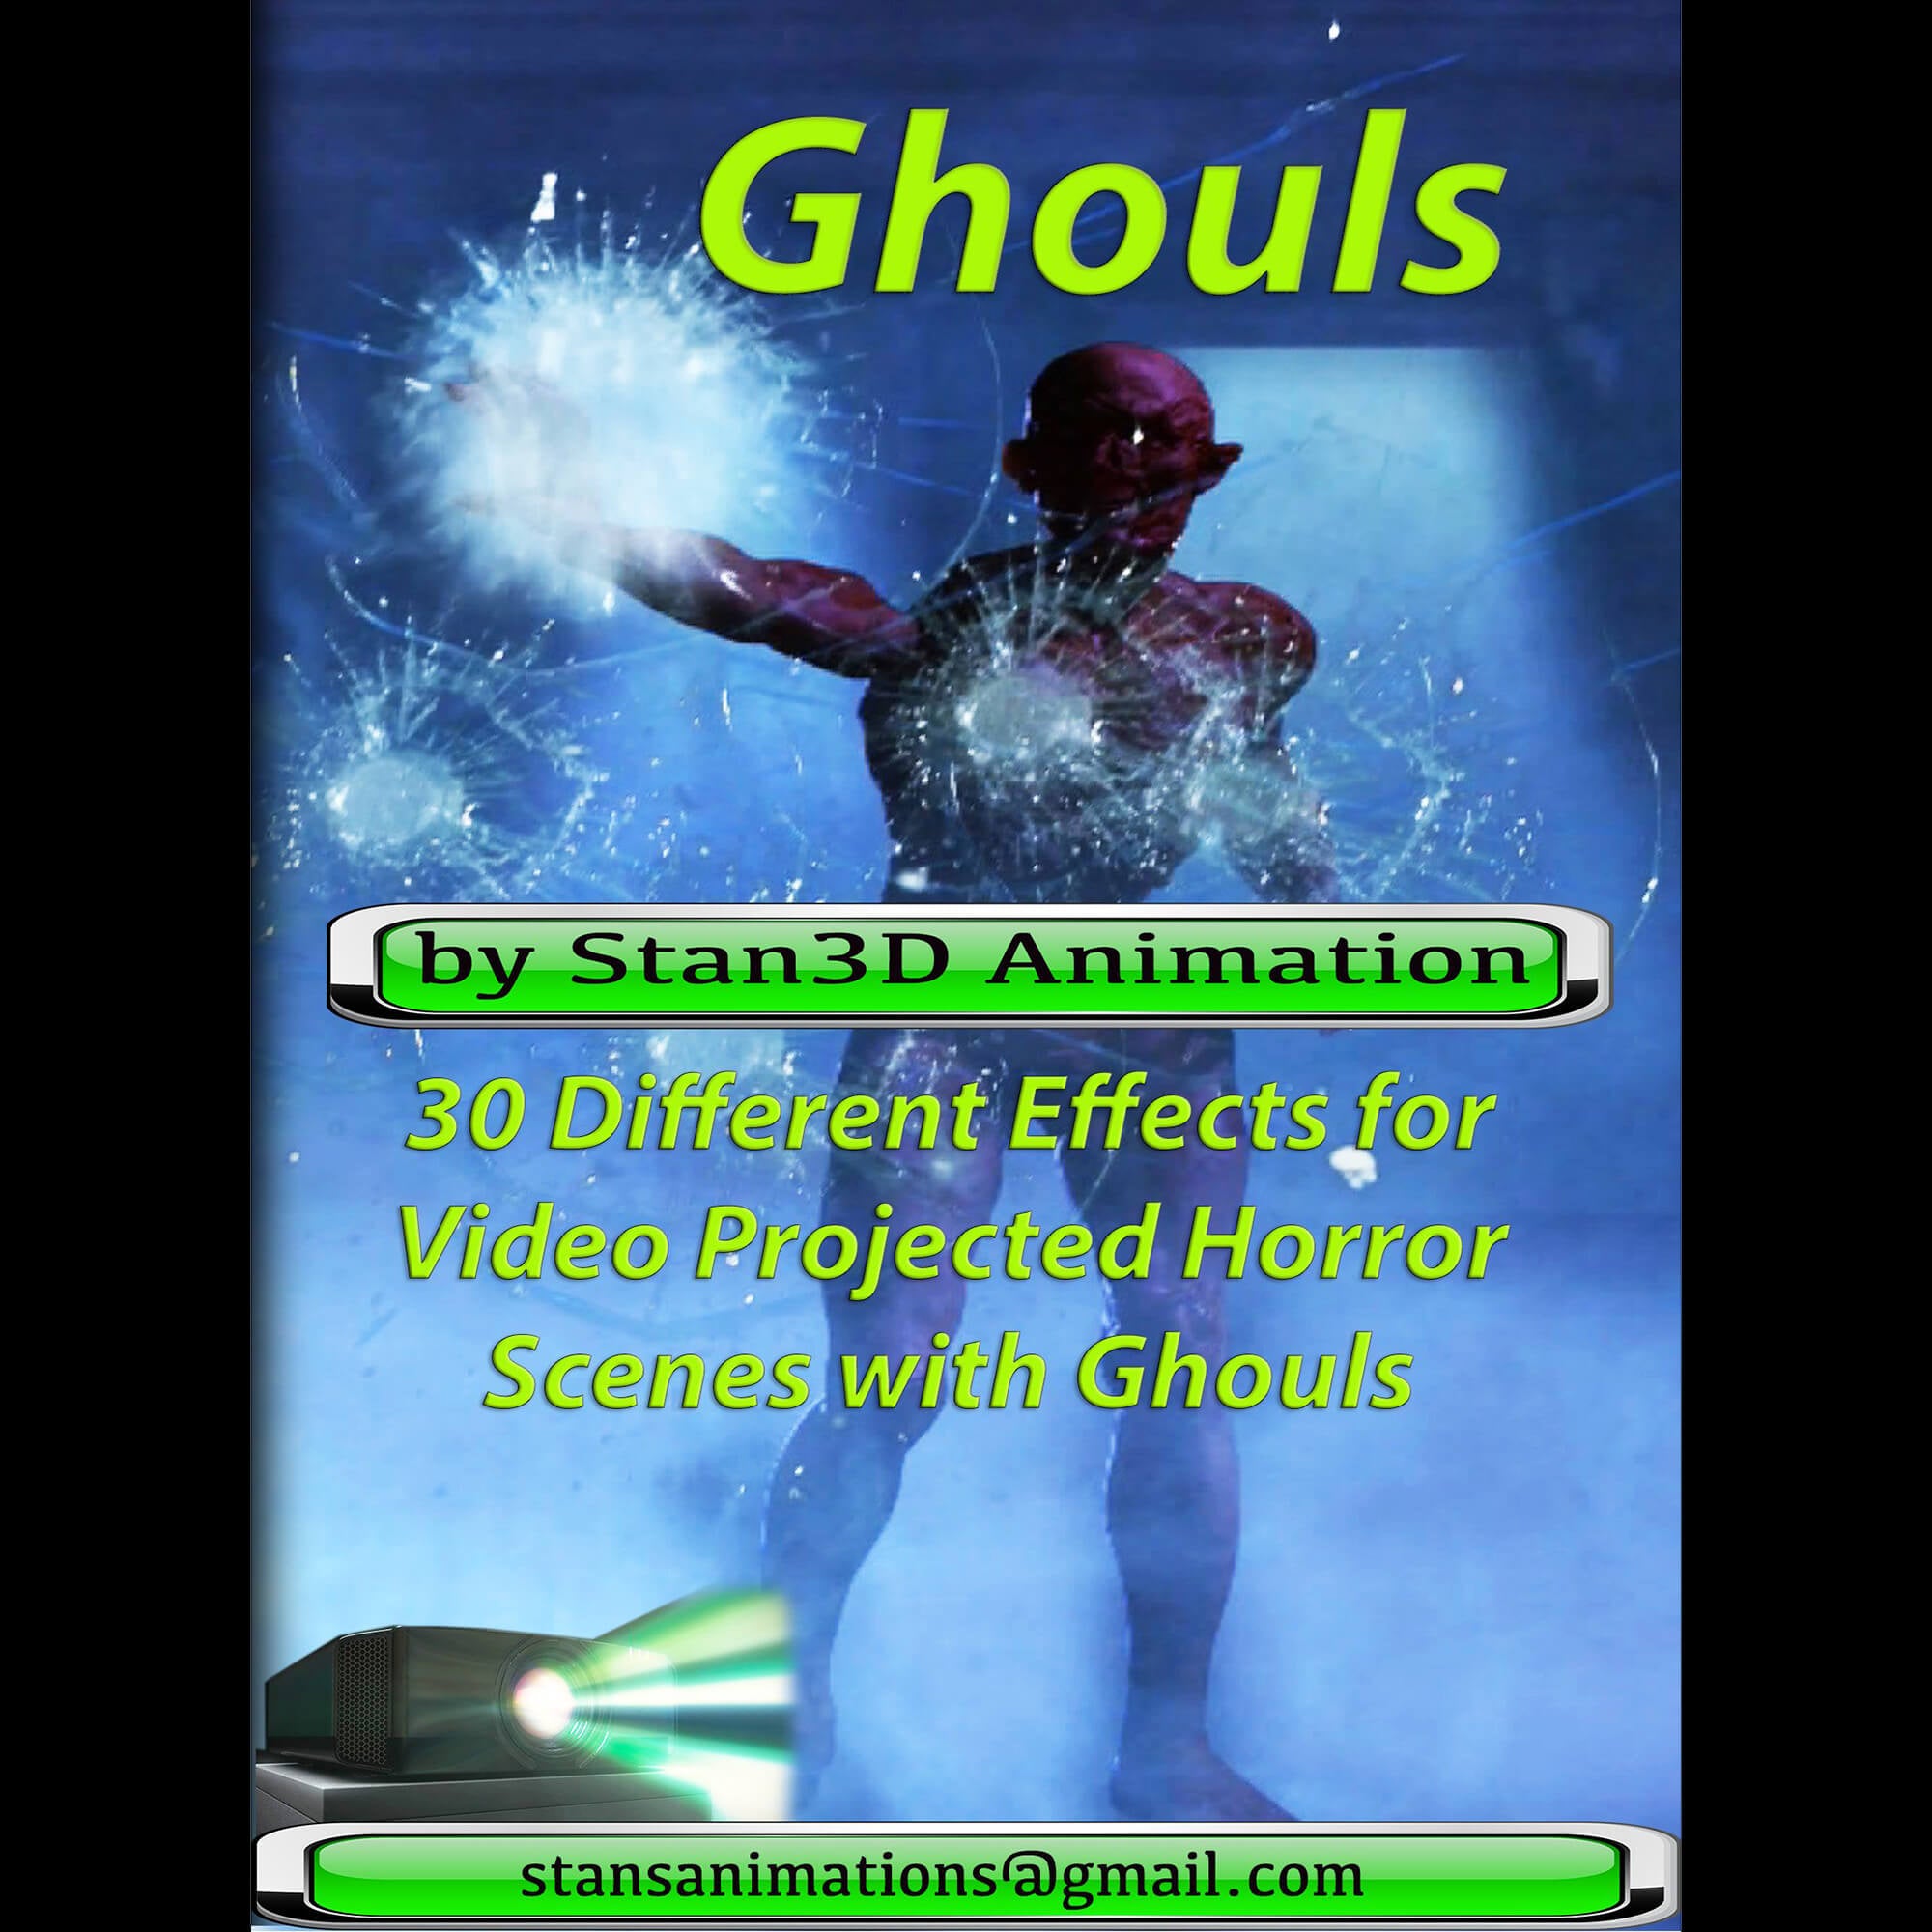 Ghouls DVD w/ Digital Files Coupon